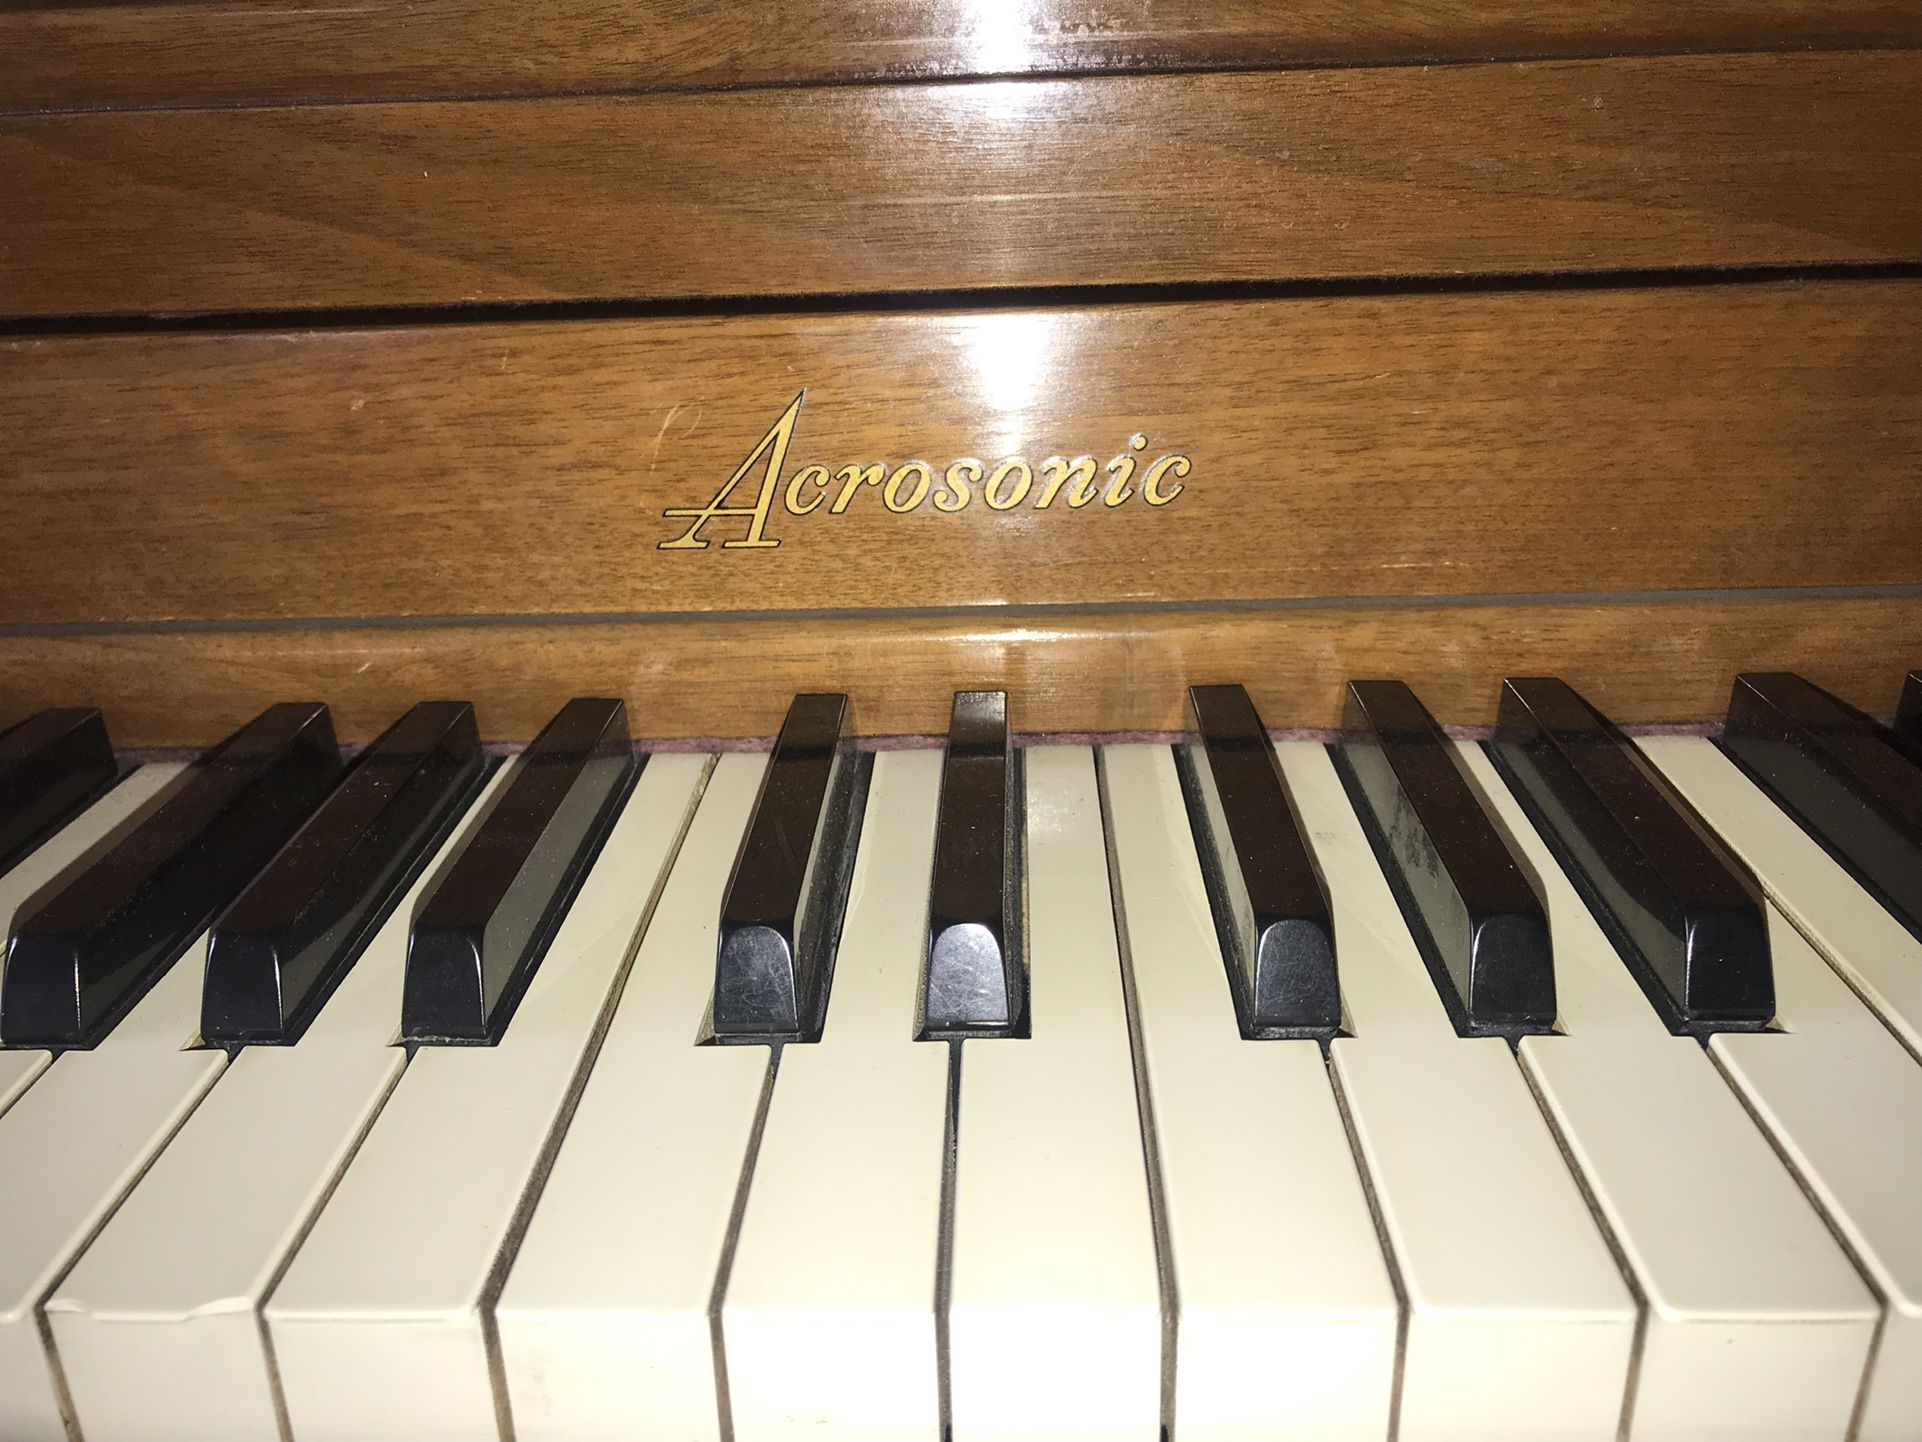 Aerosonic Baldwin Piano